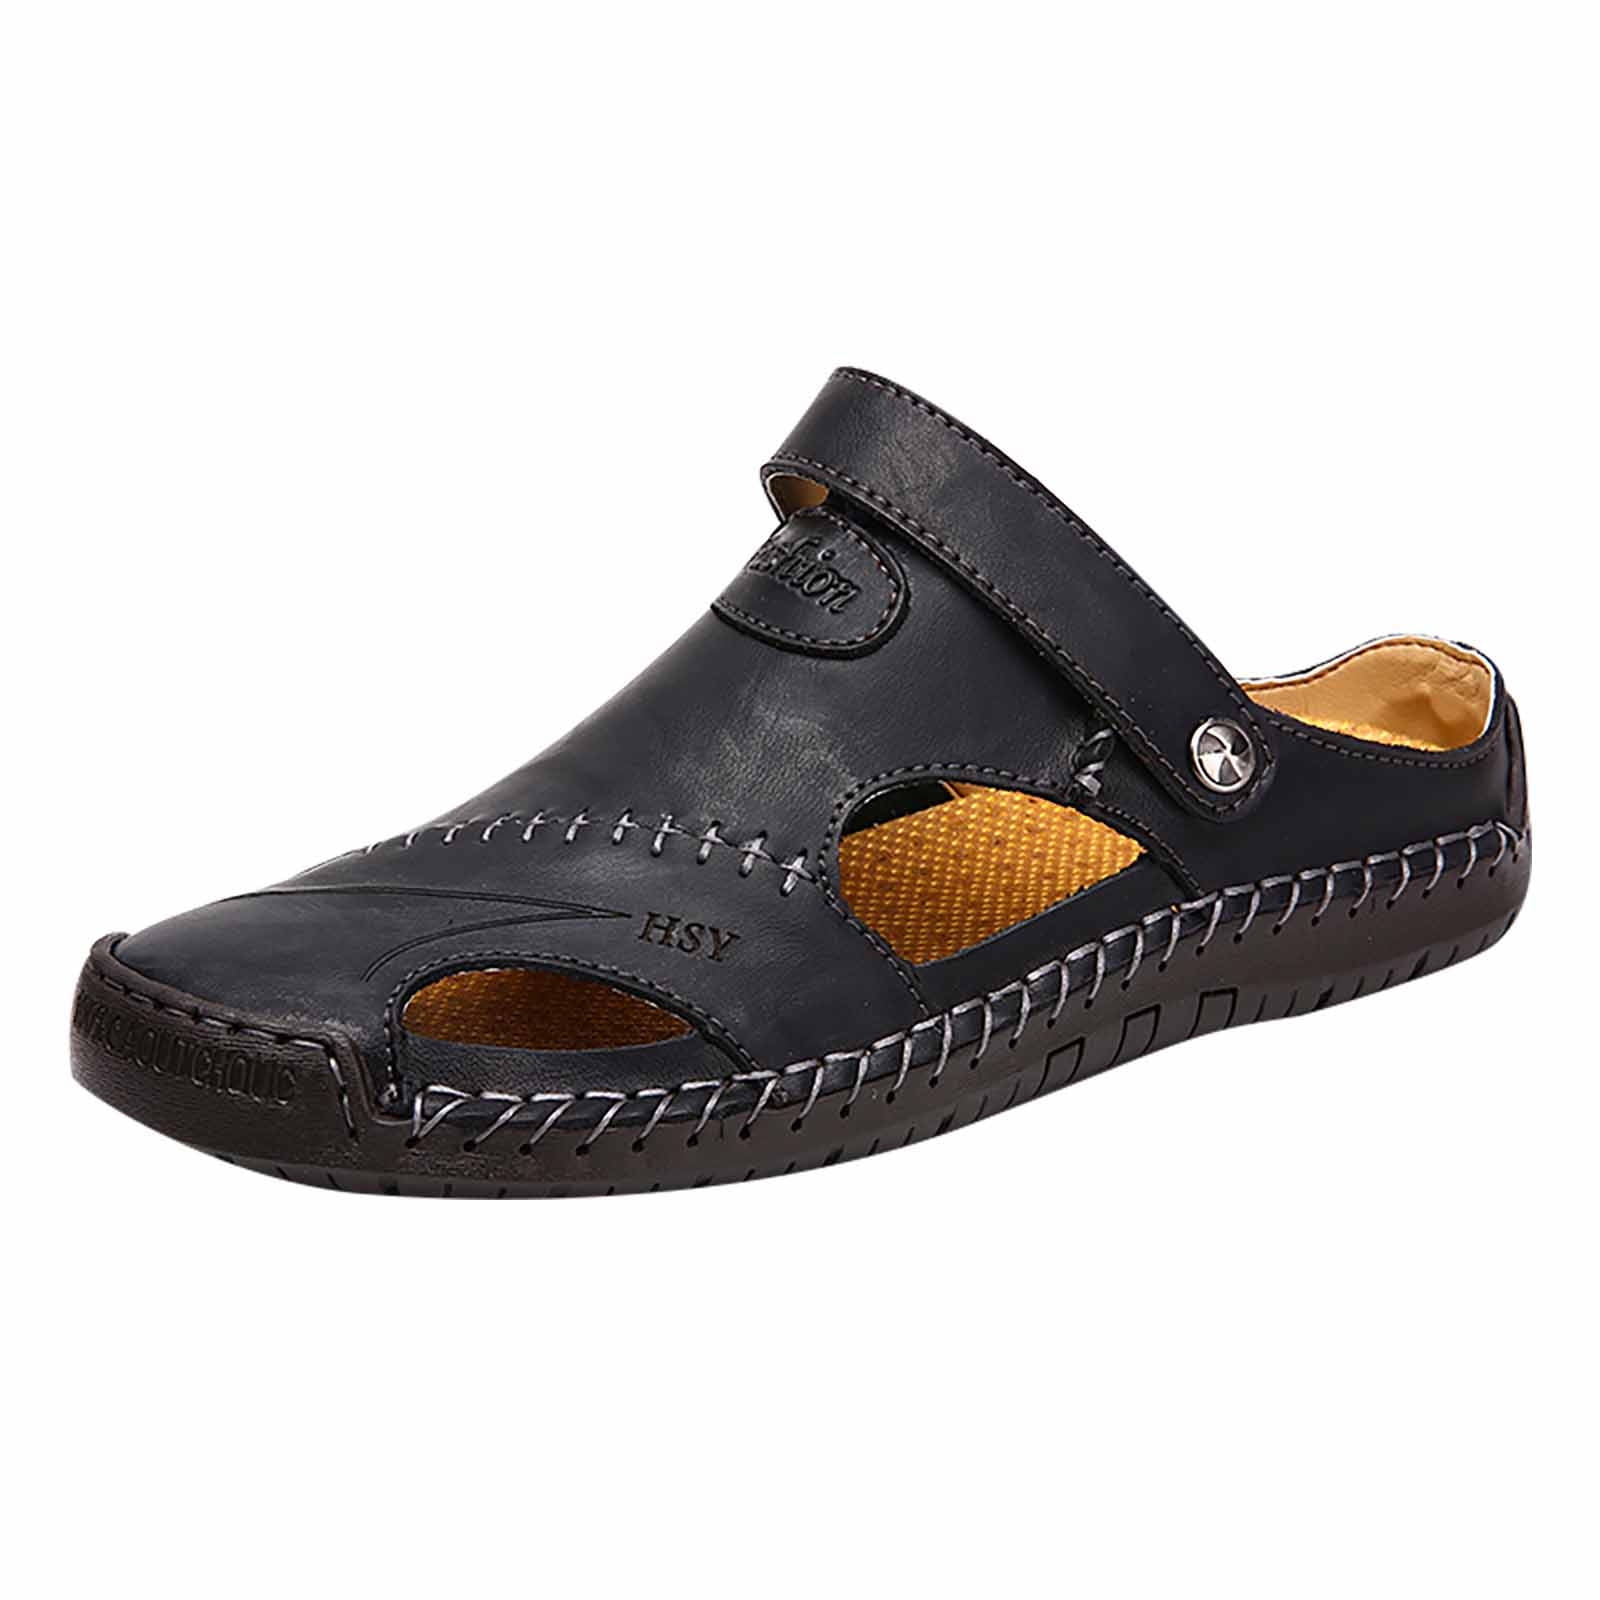 EQWLJWE Sandals Men Summer Trendy Leather Beach Shoes Sewing Non Slip ...